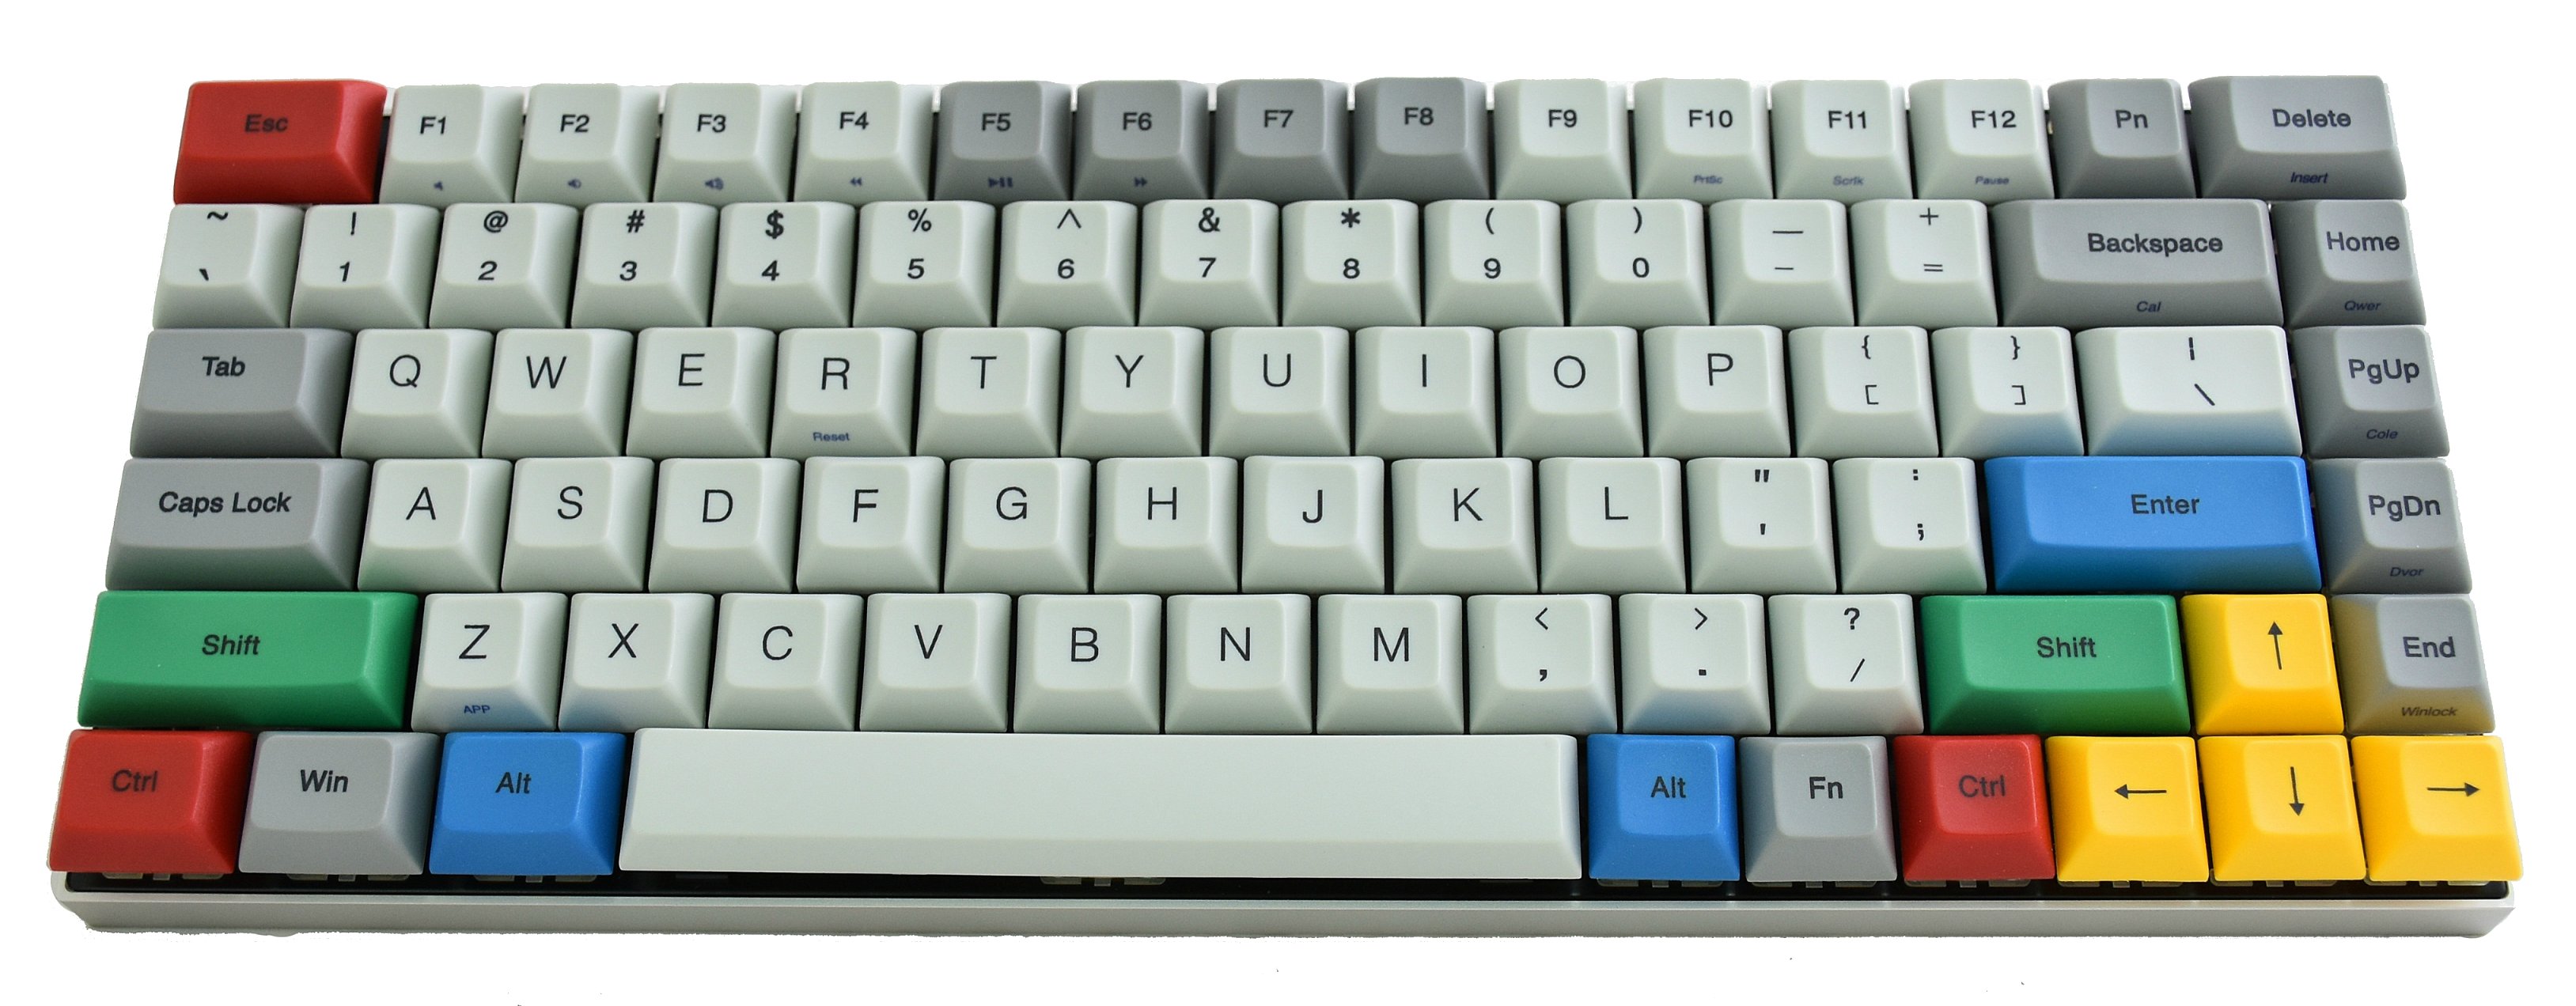 Vortex New 75 (Race 3) keyboard